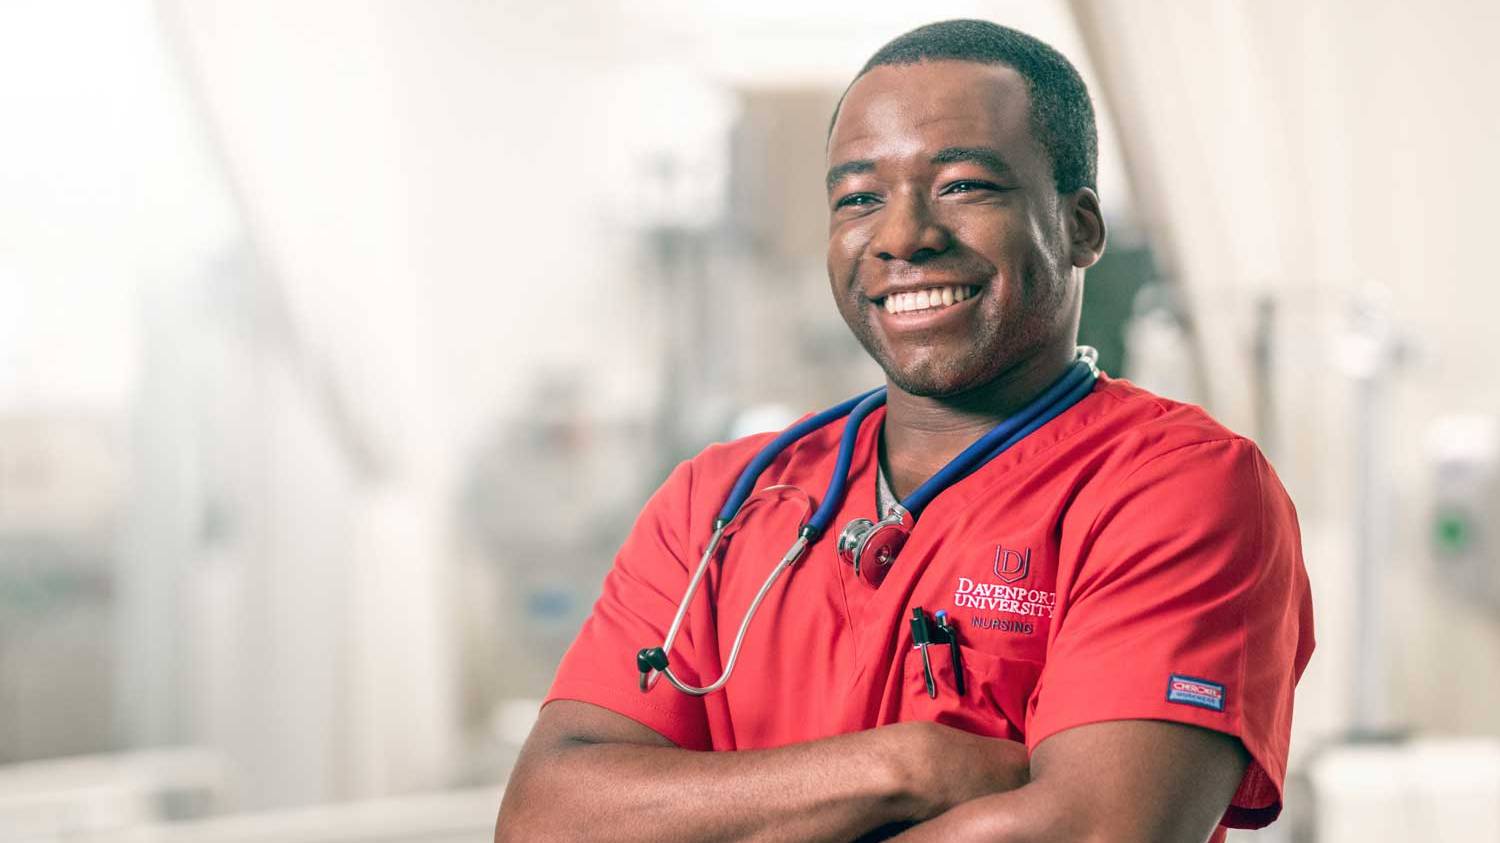 male nurse smiling